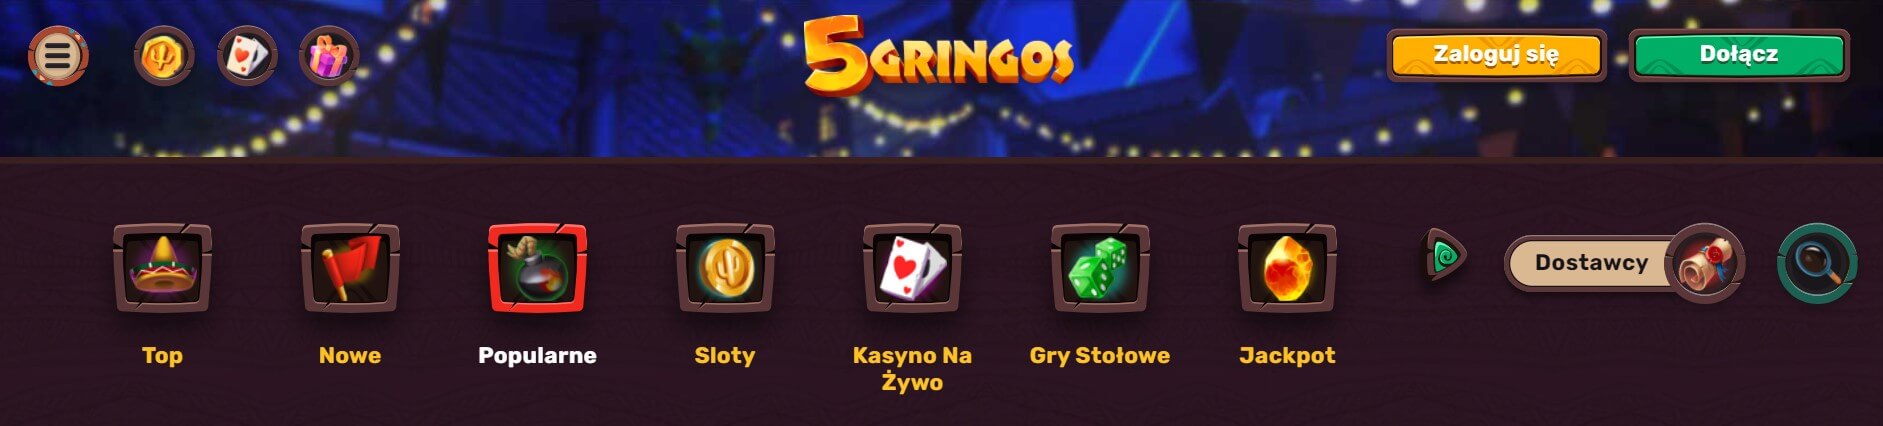 5gringos casino menu gier screenshot